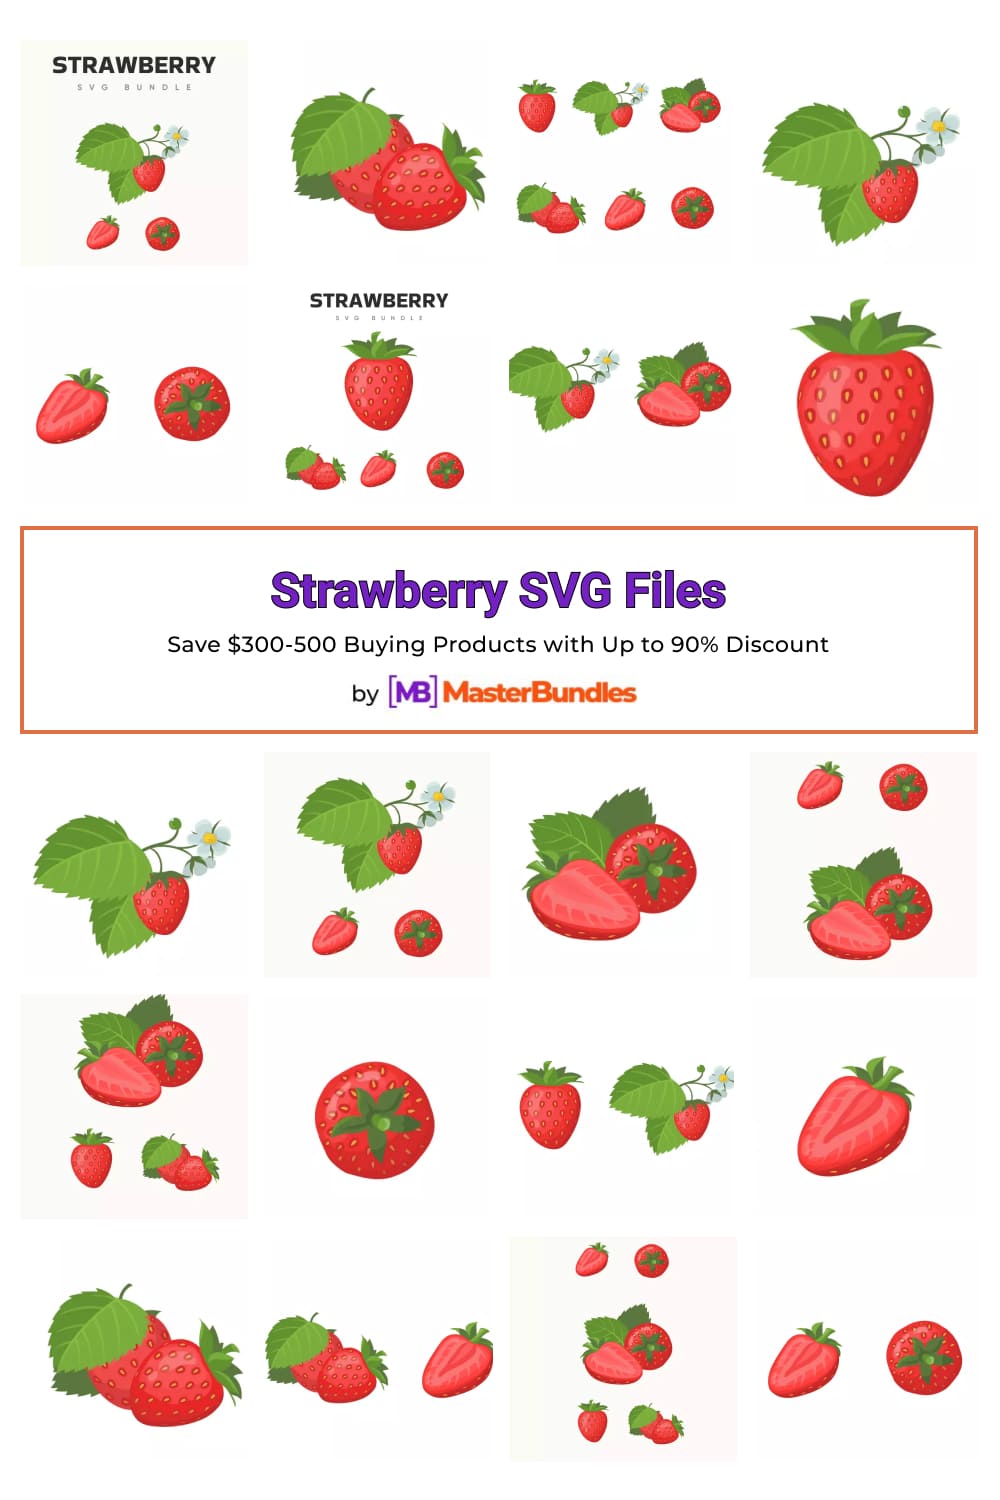 Strawberry SVG Files Pinterest image.